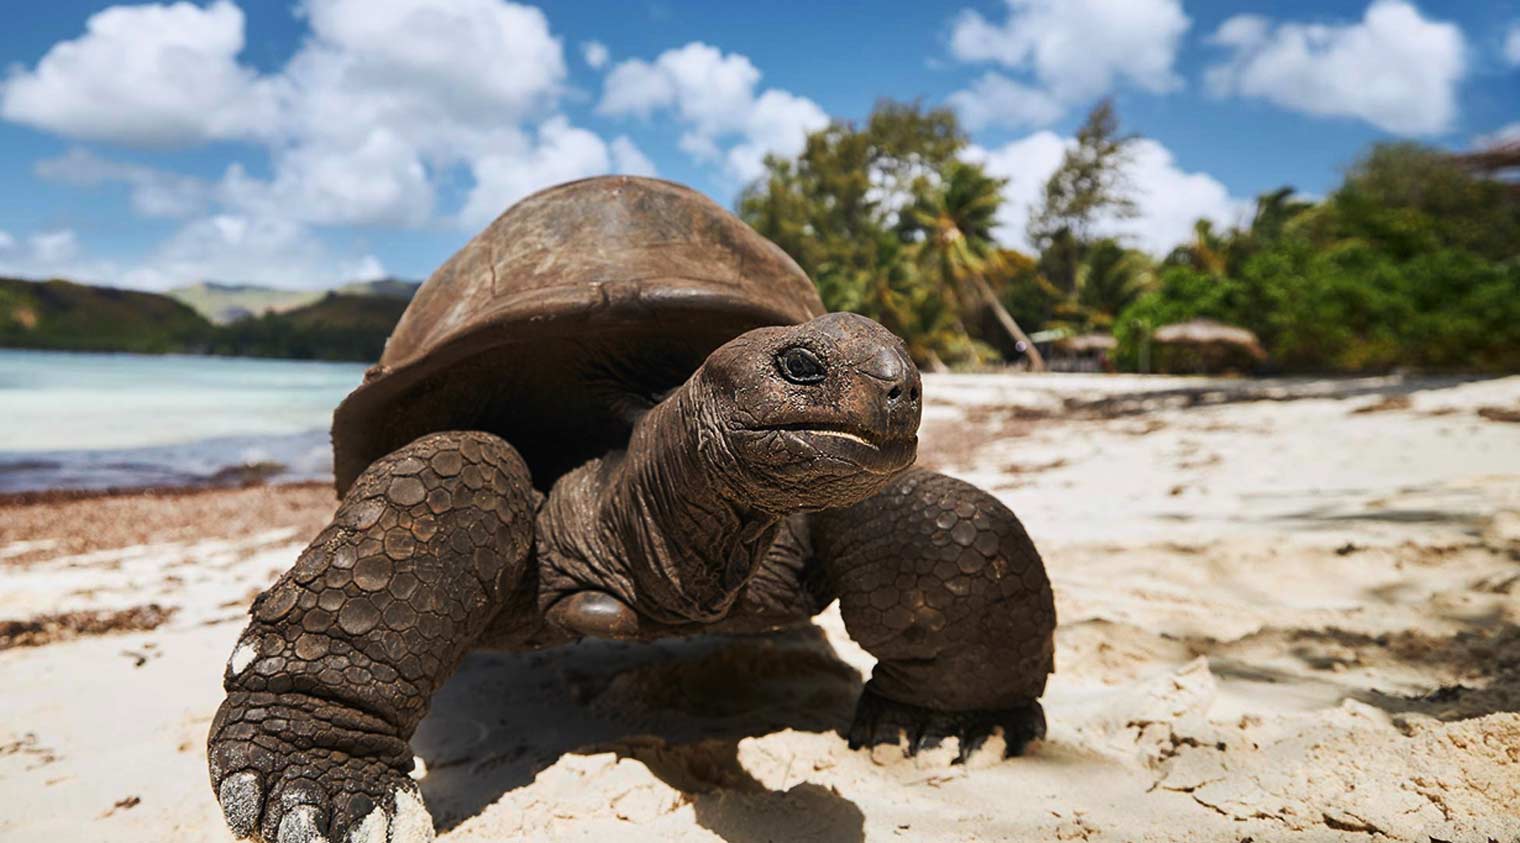 galapagos giant turtle of galapagos islands